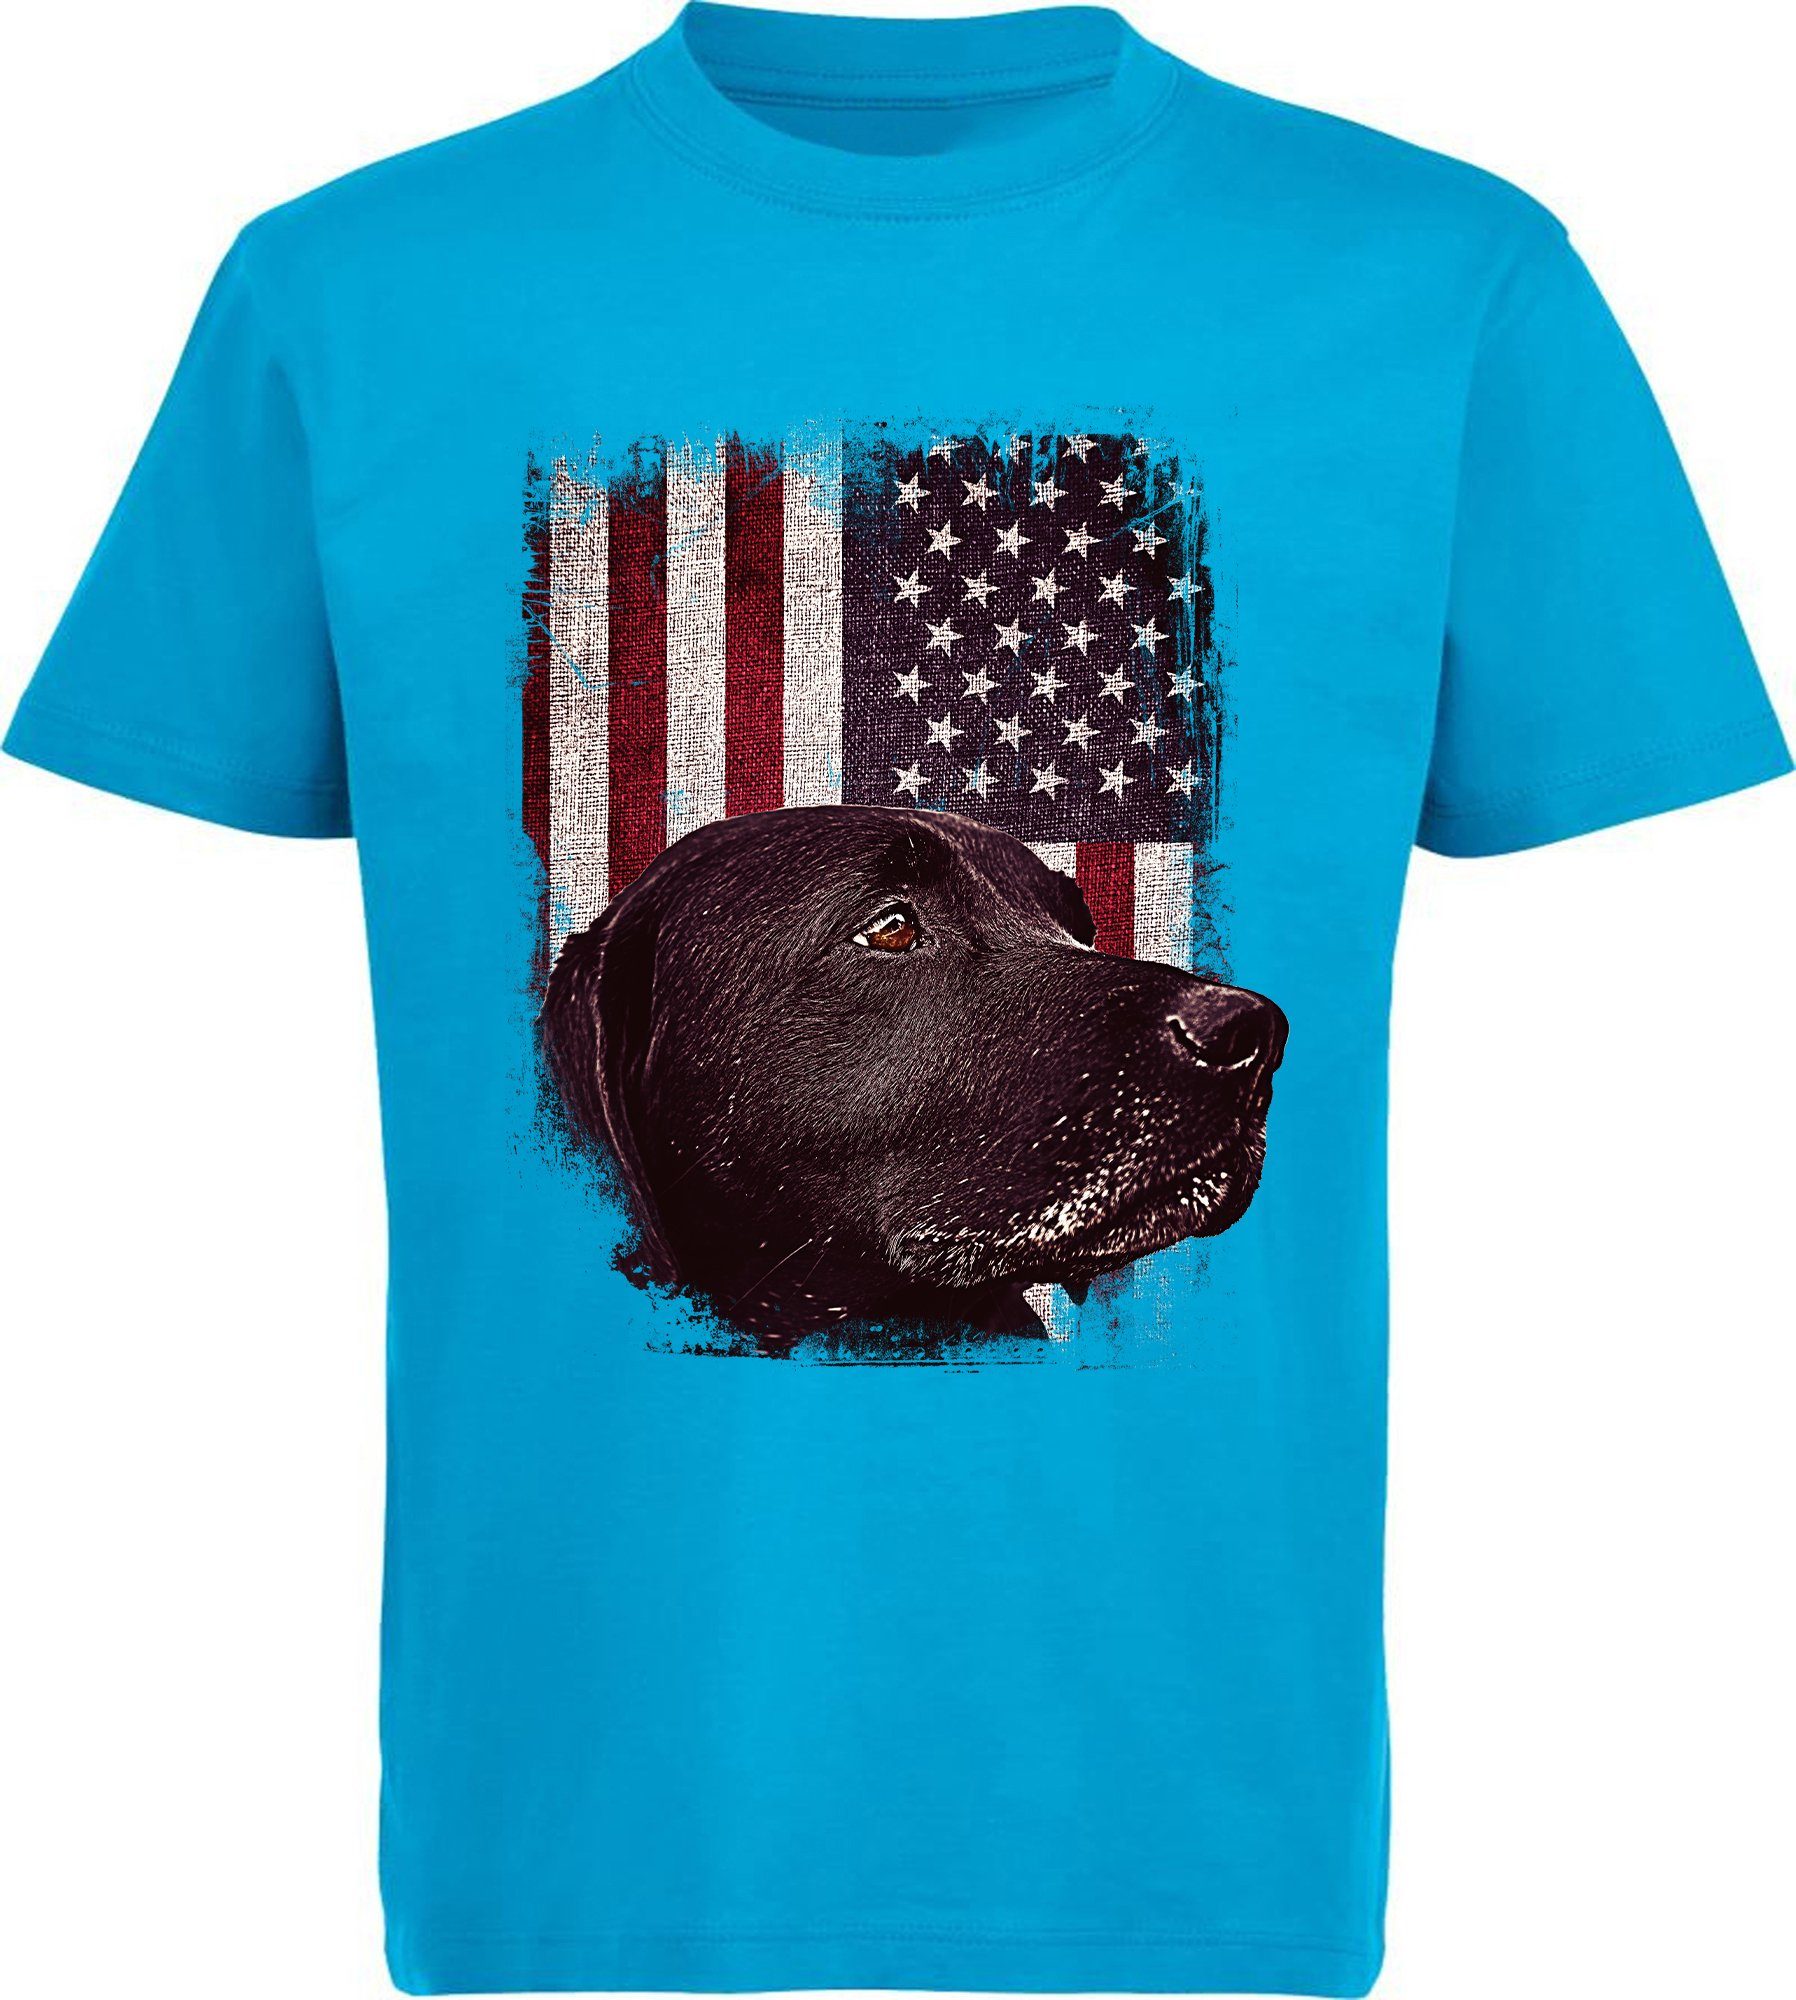 MyDesign24 T-Shirt Kinder Hunde Print Shirt bedruckt - schwarzer Labrador vor USA Flagge Baumwollshirt mit Aufdruck, i246 aqua blau